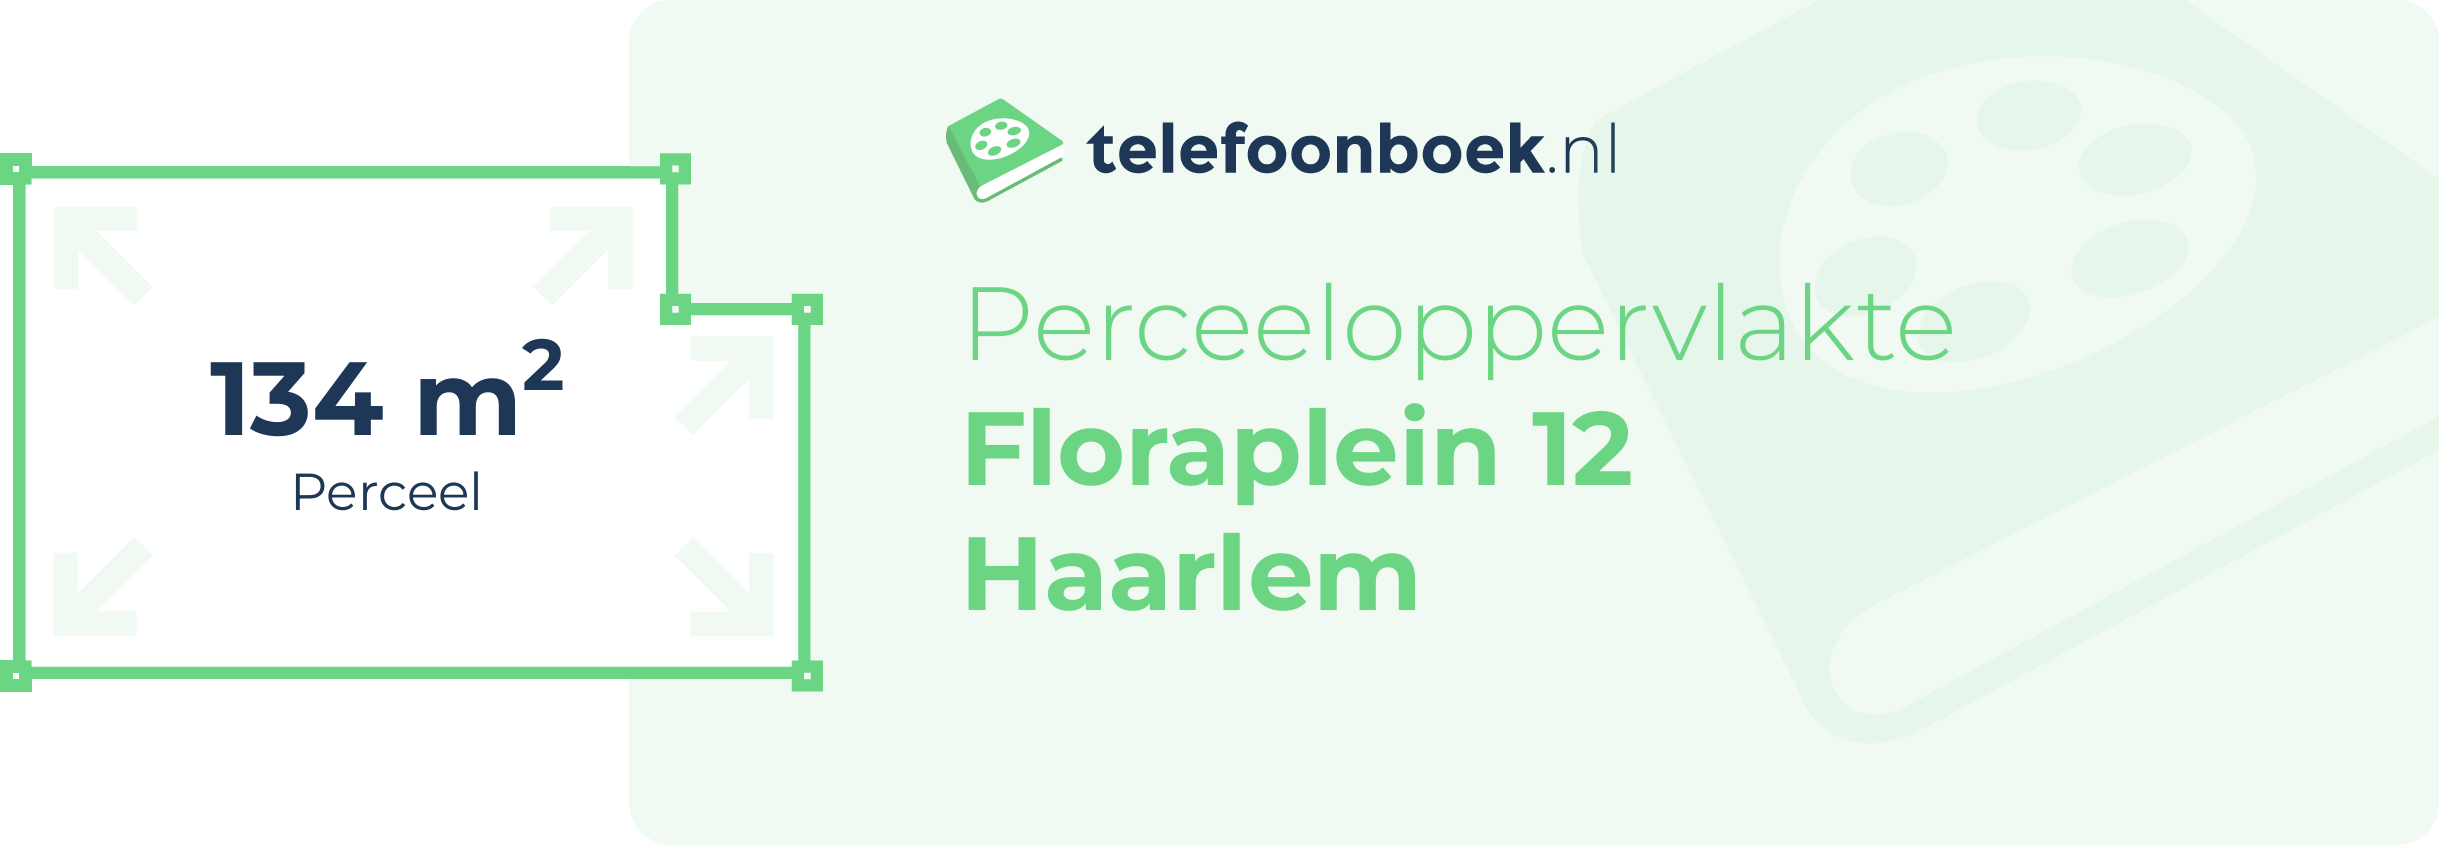 Perceeloppervlakte Floraplein 12 Haarlem